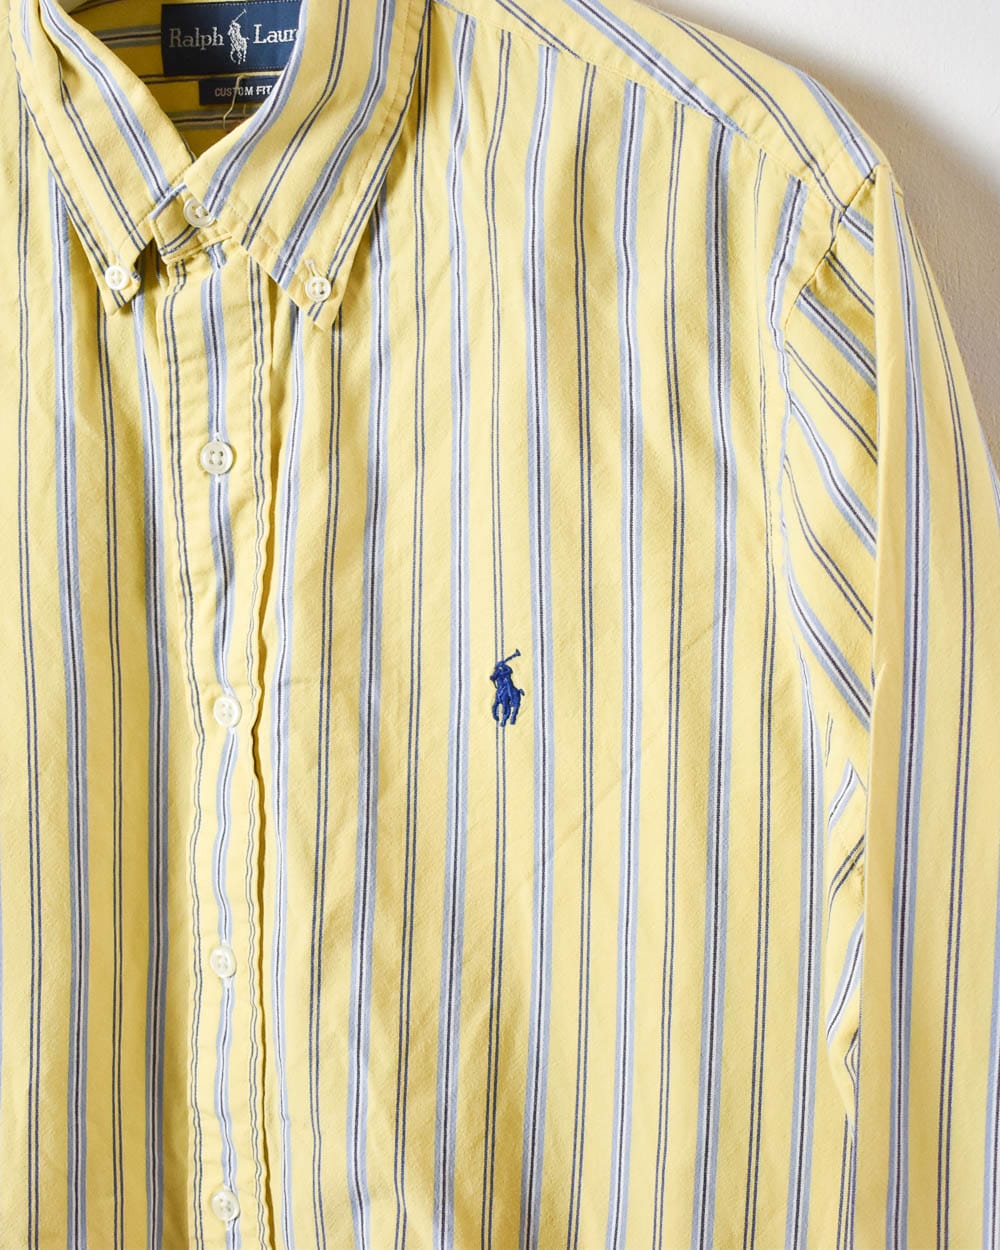 Yellow Polo Ralph Lauren Striped Shirt - Large